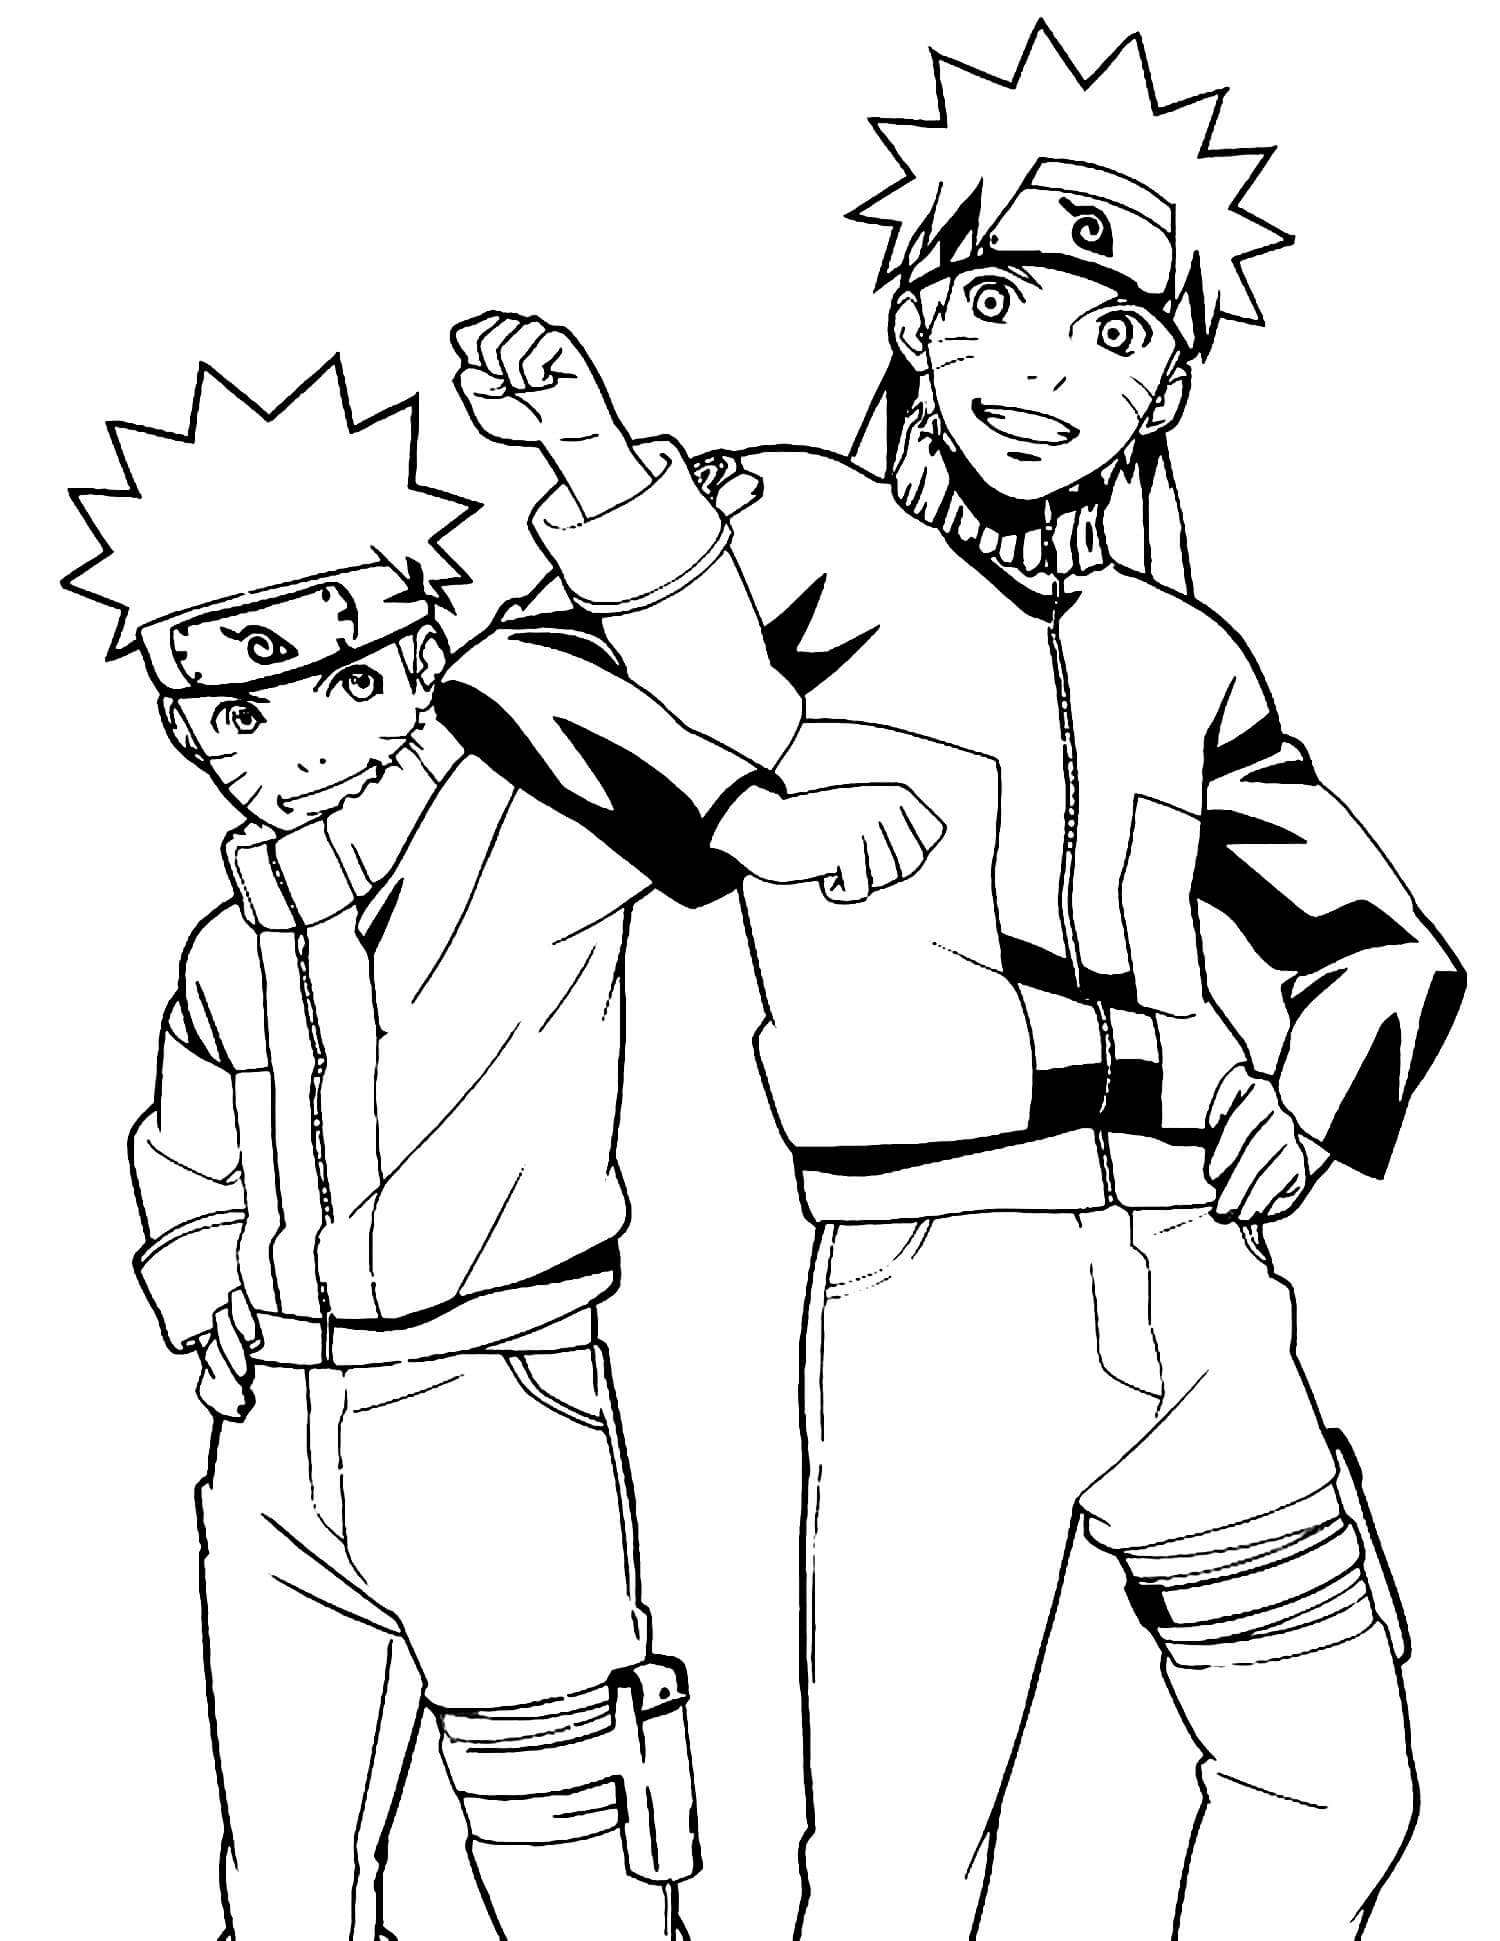 Little Naruto and Naruto